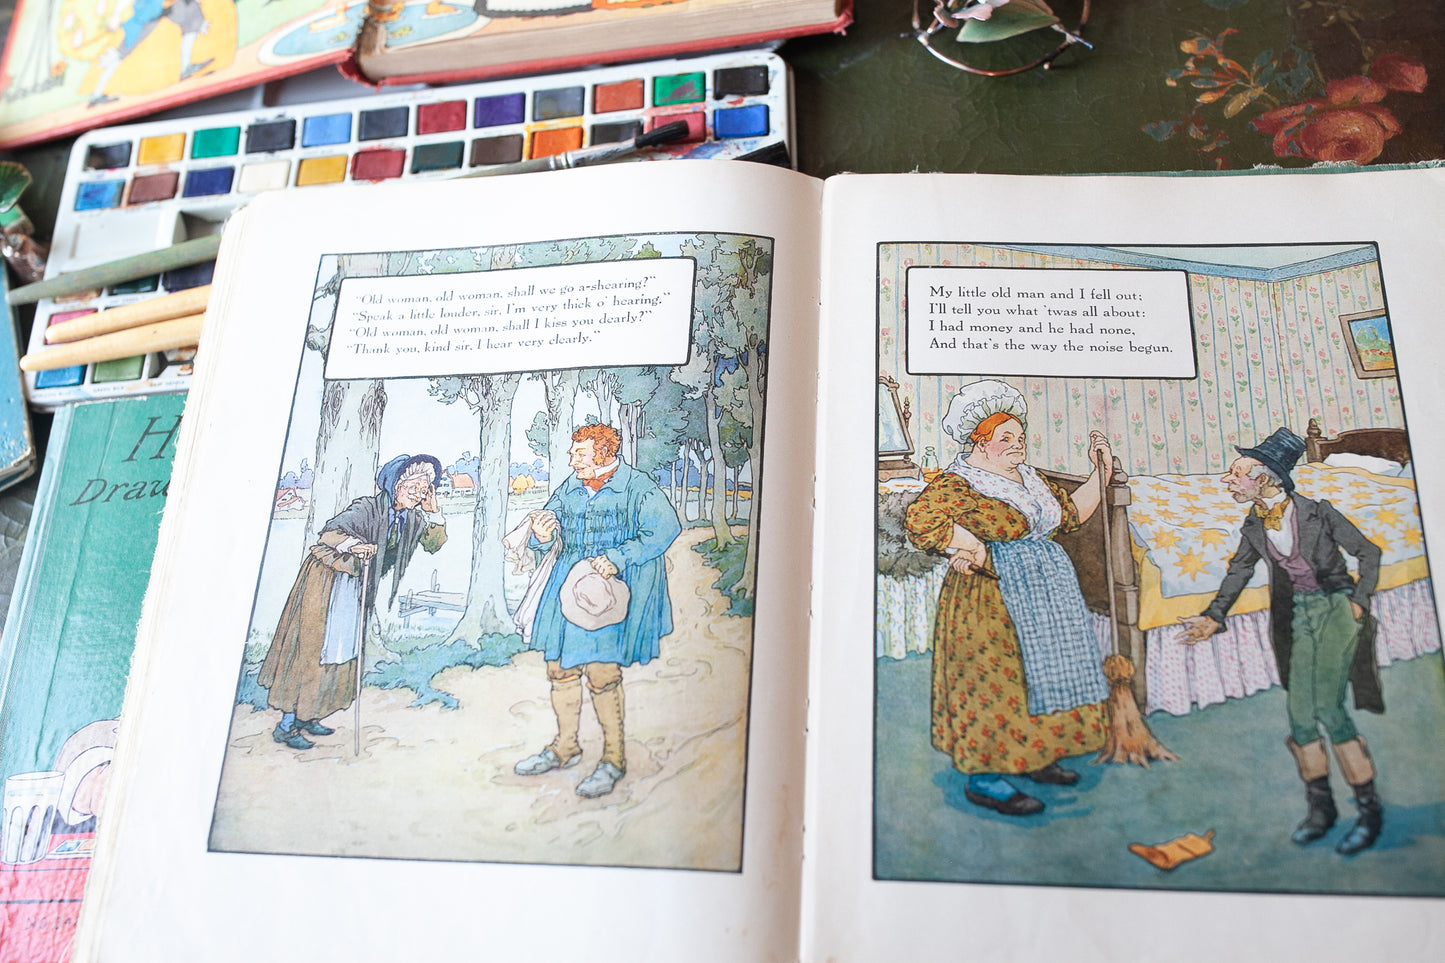 Mother Goose Volland Edition - Vintage Kids Books - Nursery Rhymes